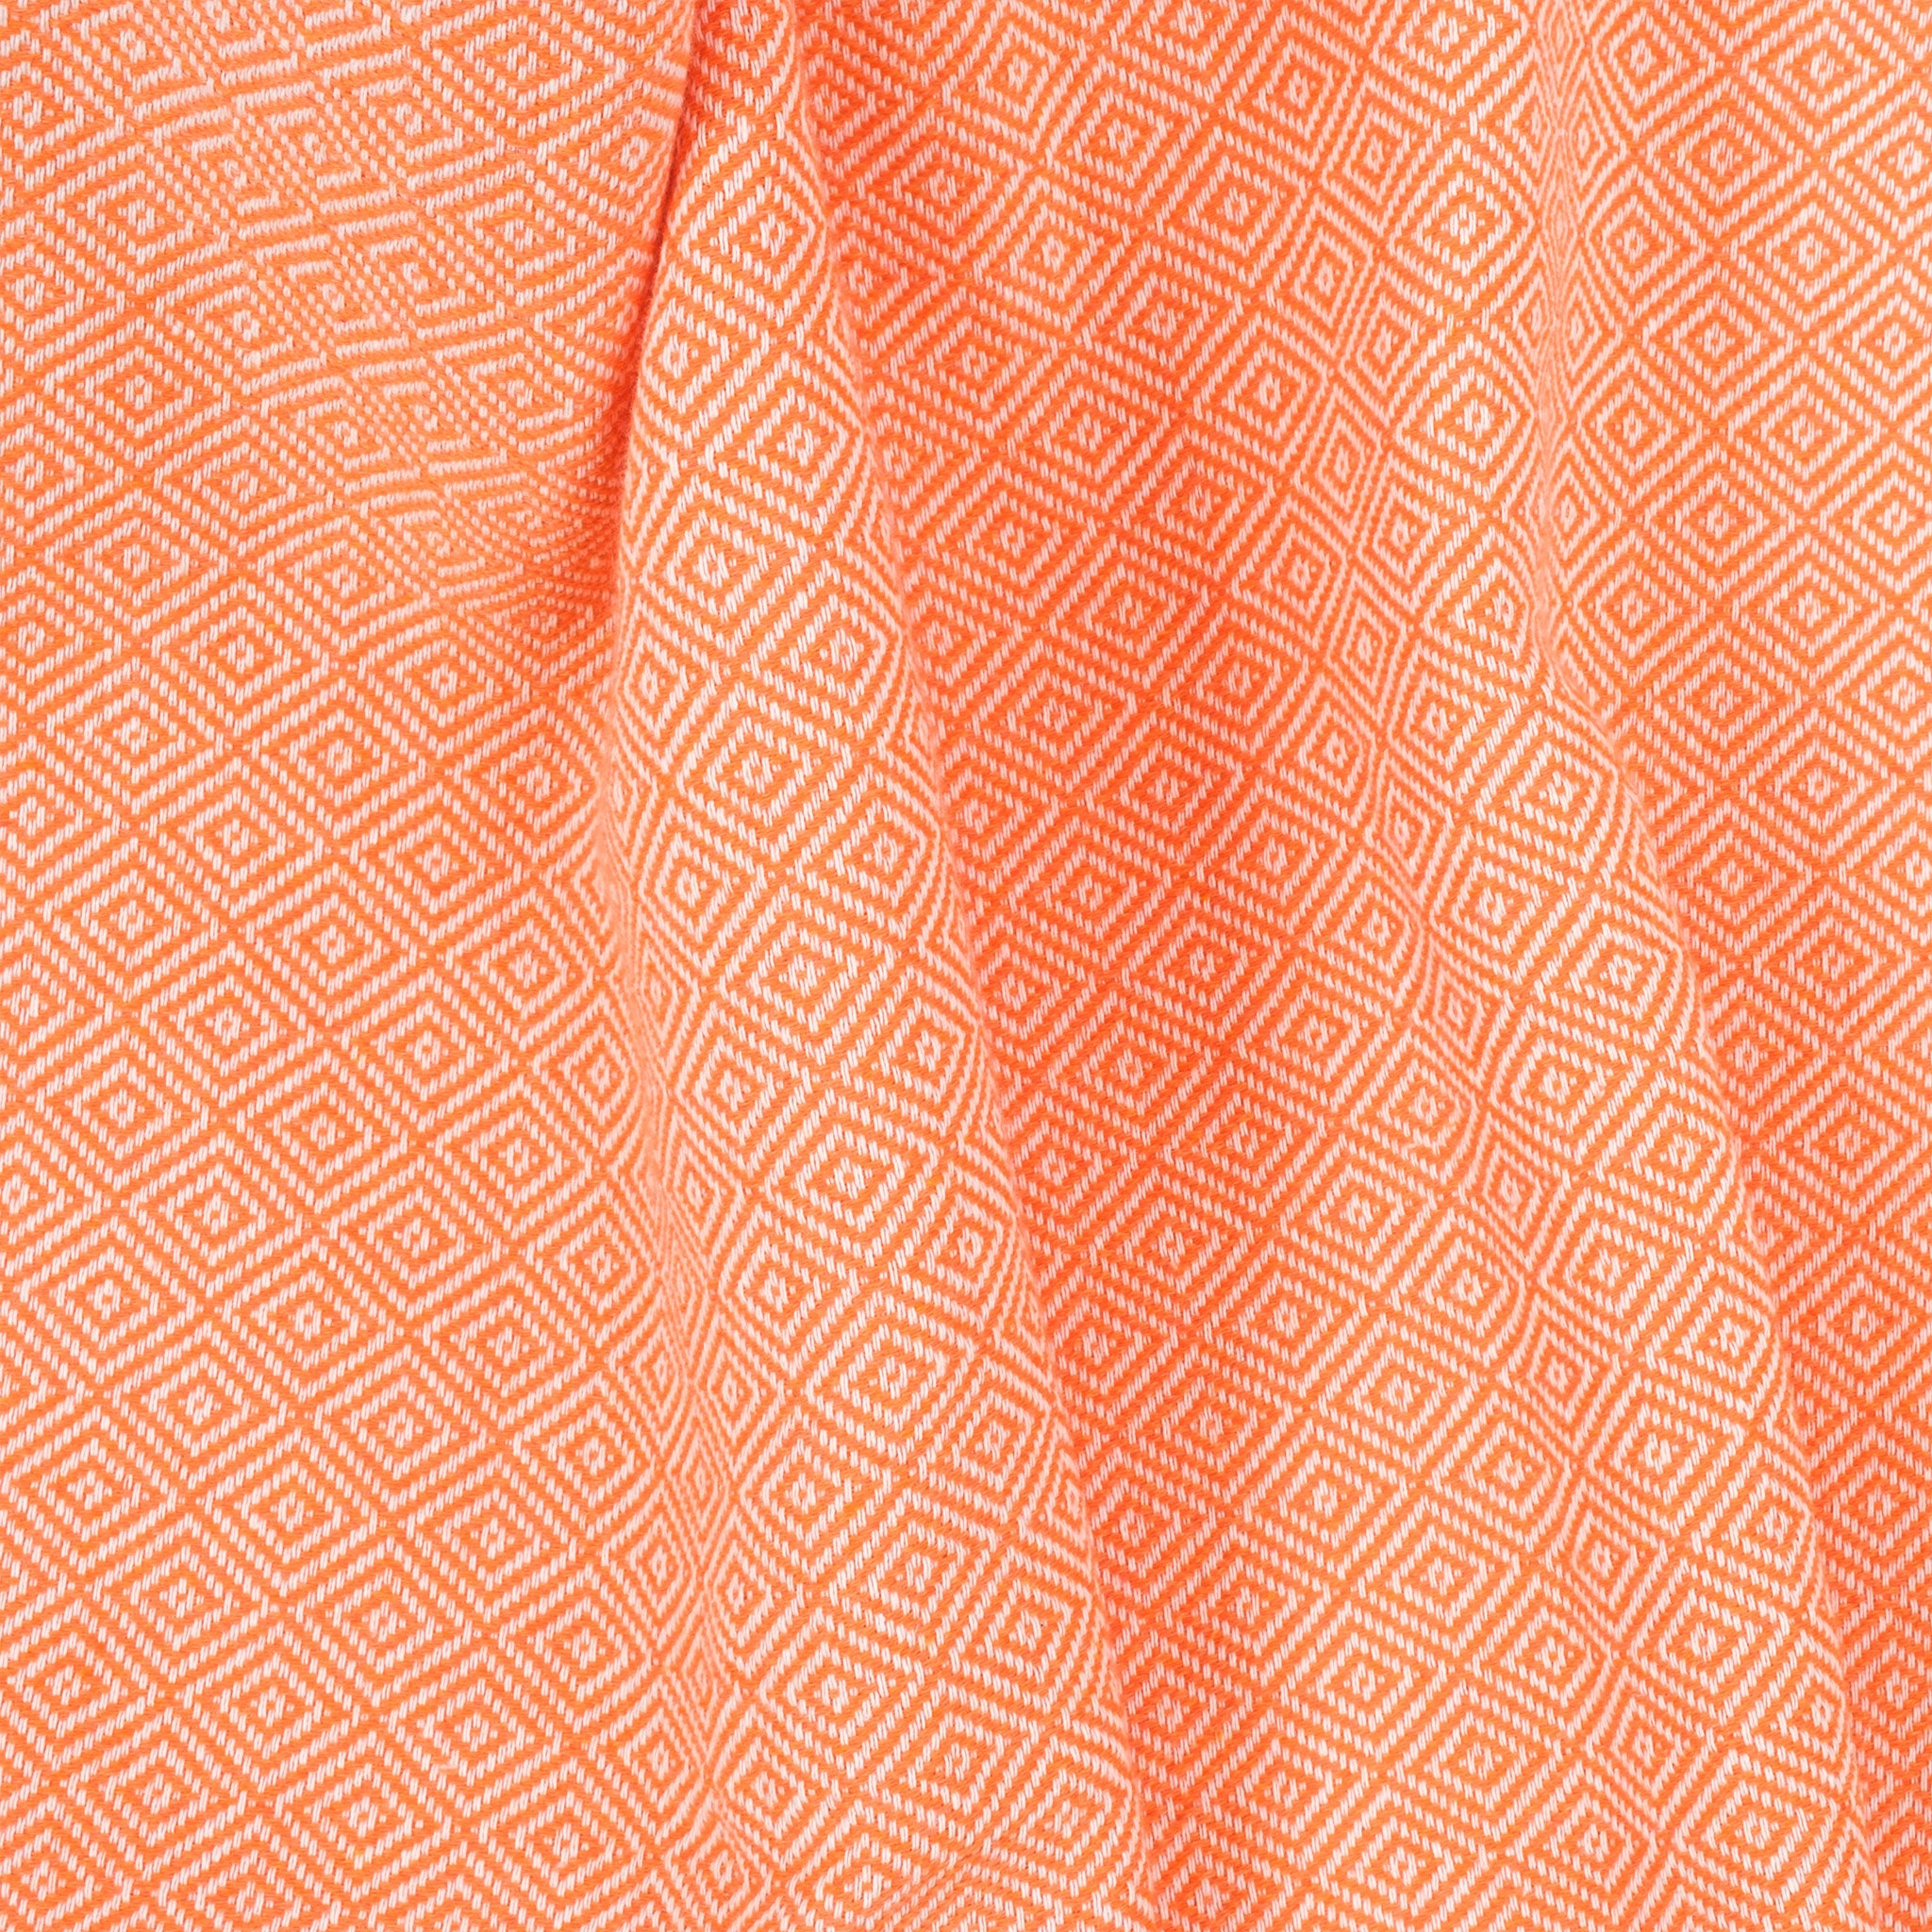 American Soft Linen - 100% Cotton Turkish Peshtemal Towels 40x70 Inches - Orange - 2